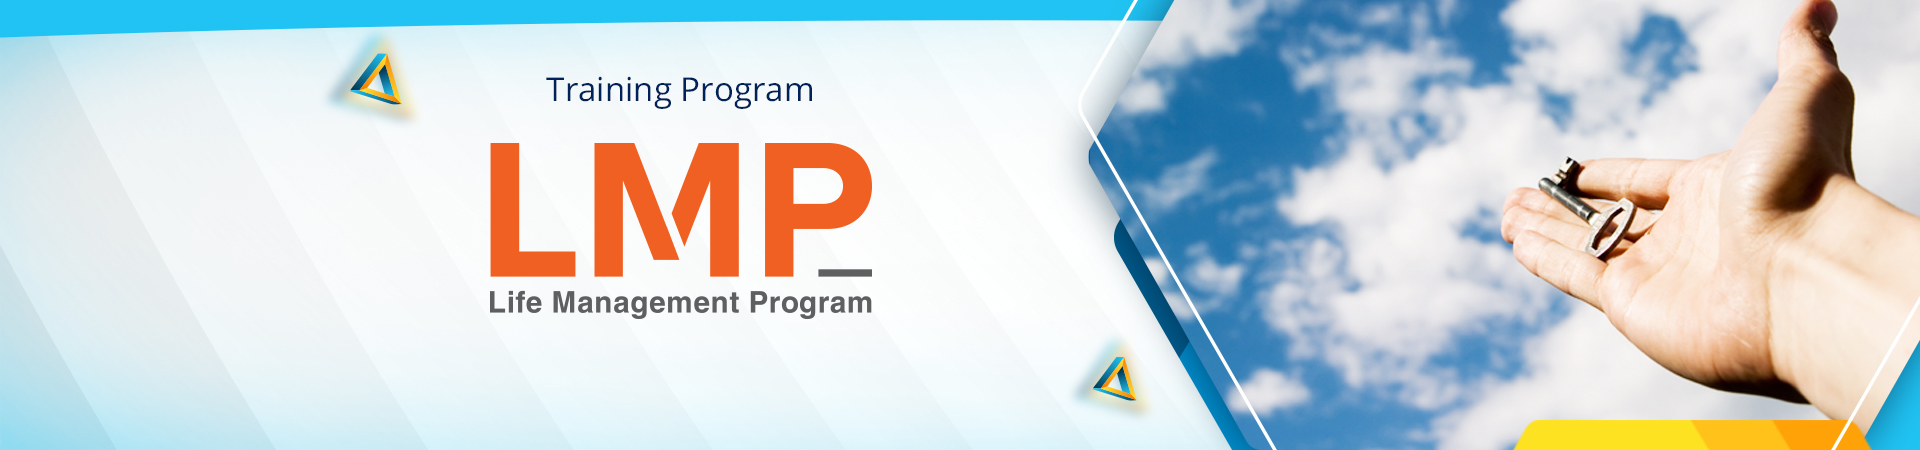 LMP - Life Management Program